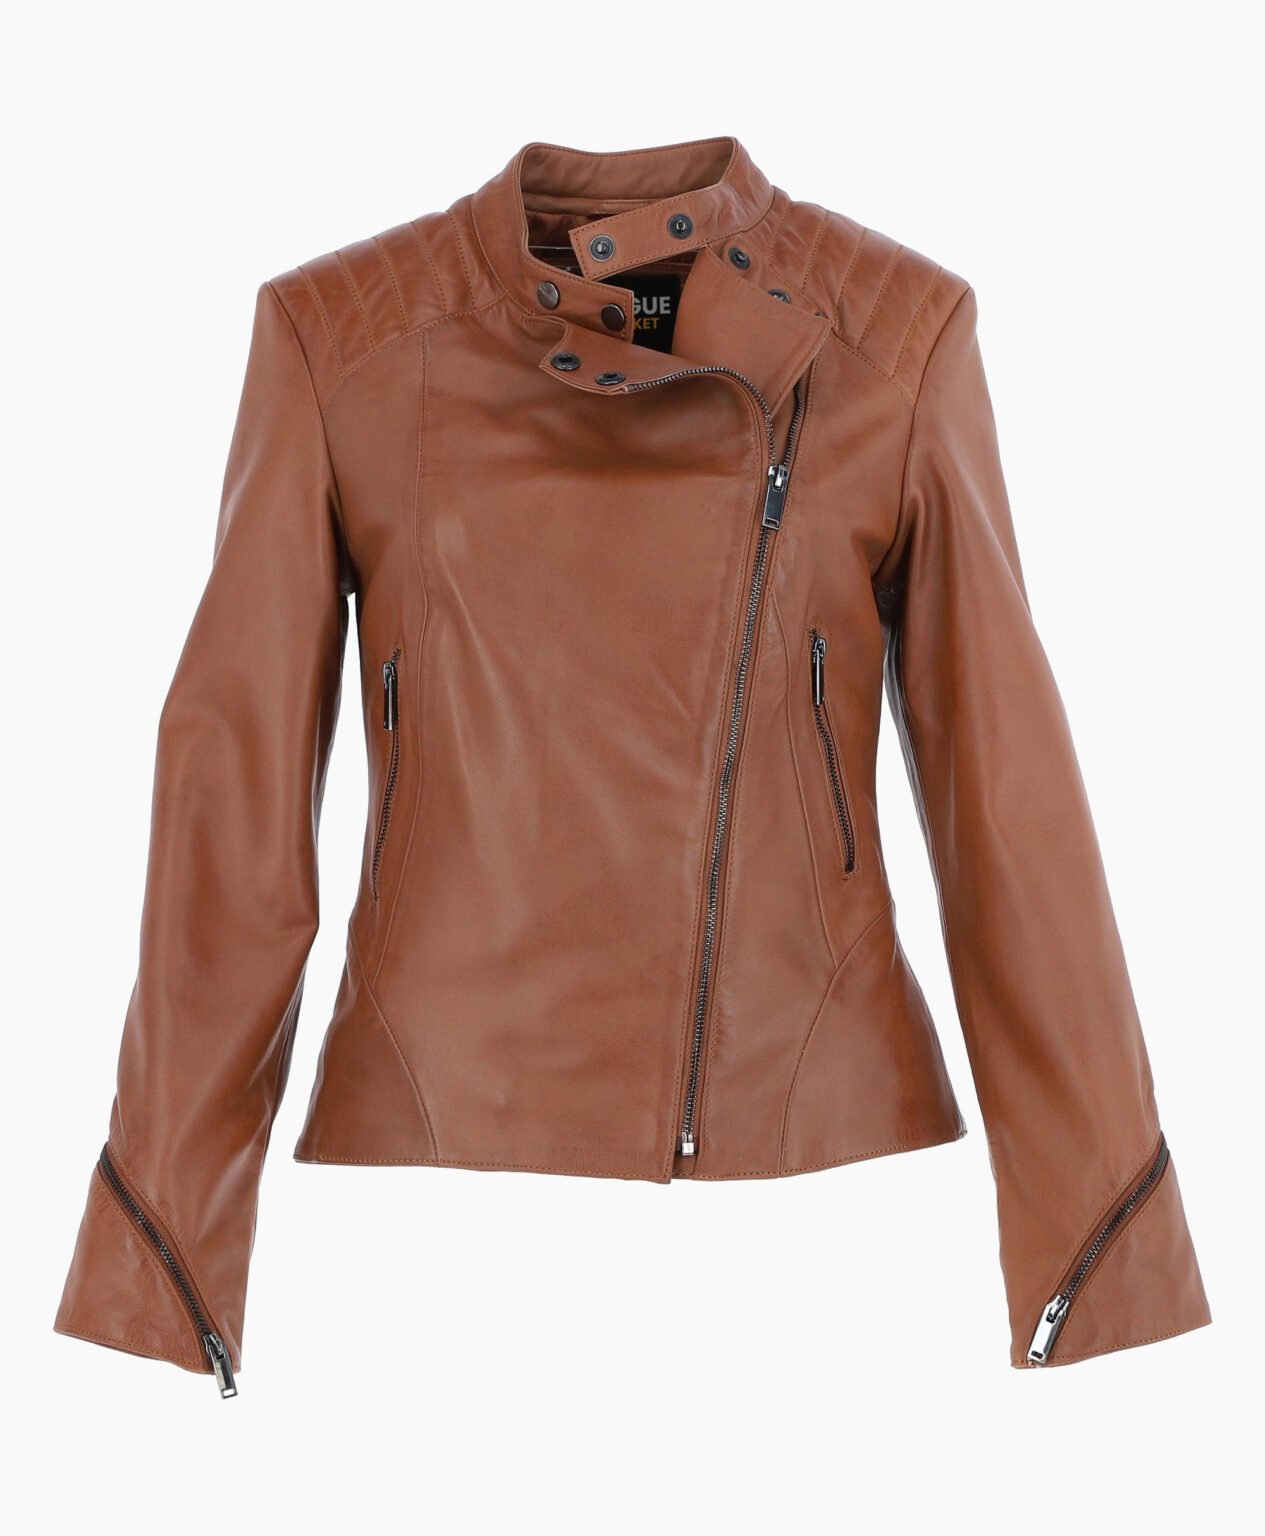 vogue-jacket-leather-biker-jacket-tan-mundelein-image200